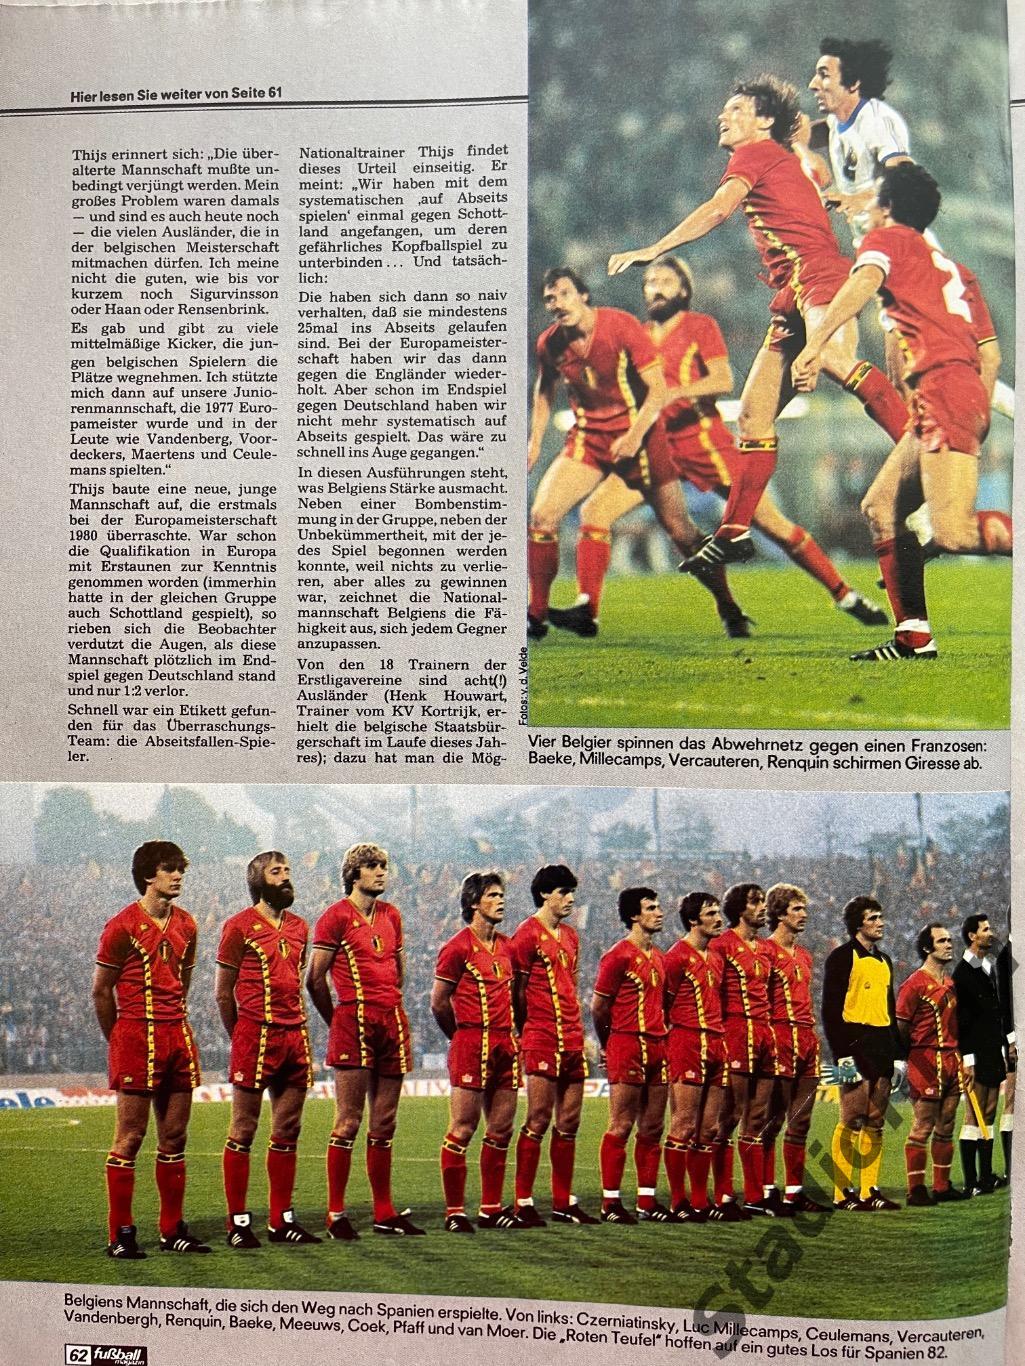 Журнал Fussball magazin nr.6 - 1981 год. 2